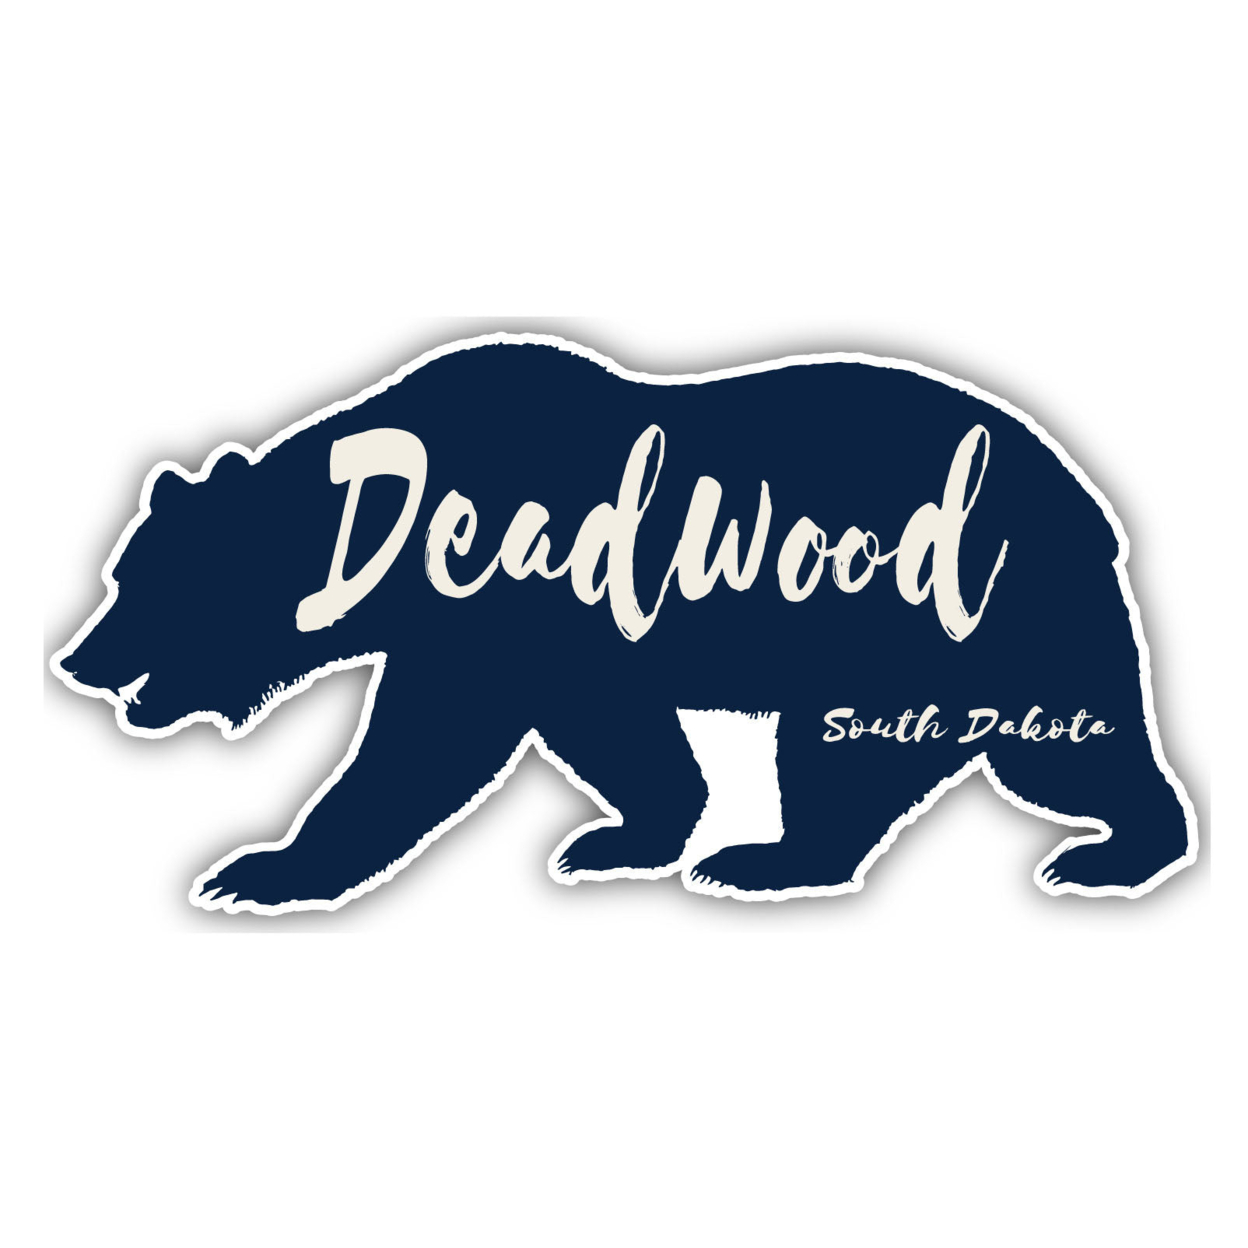 Deadwood South Dakota Souvenir Decorative Stickers (Choose Theme And Size) - 4-Pack, 6-Inch, Bear